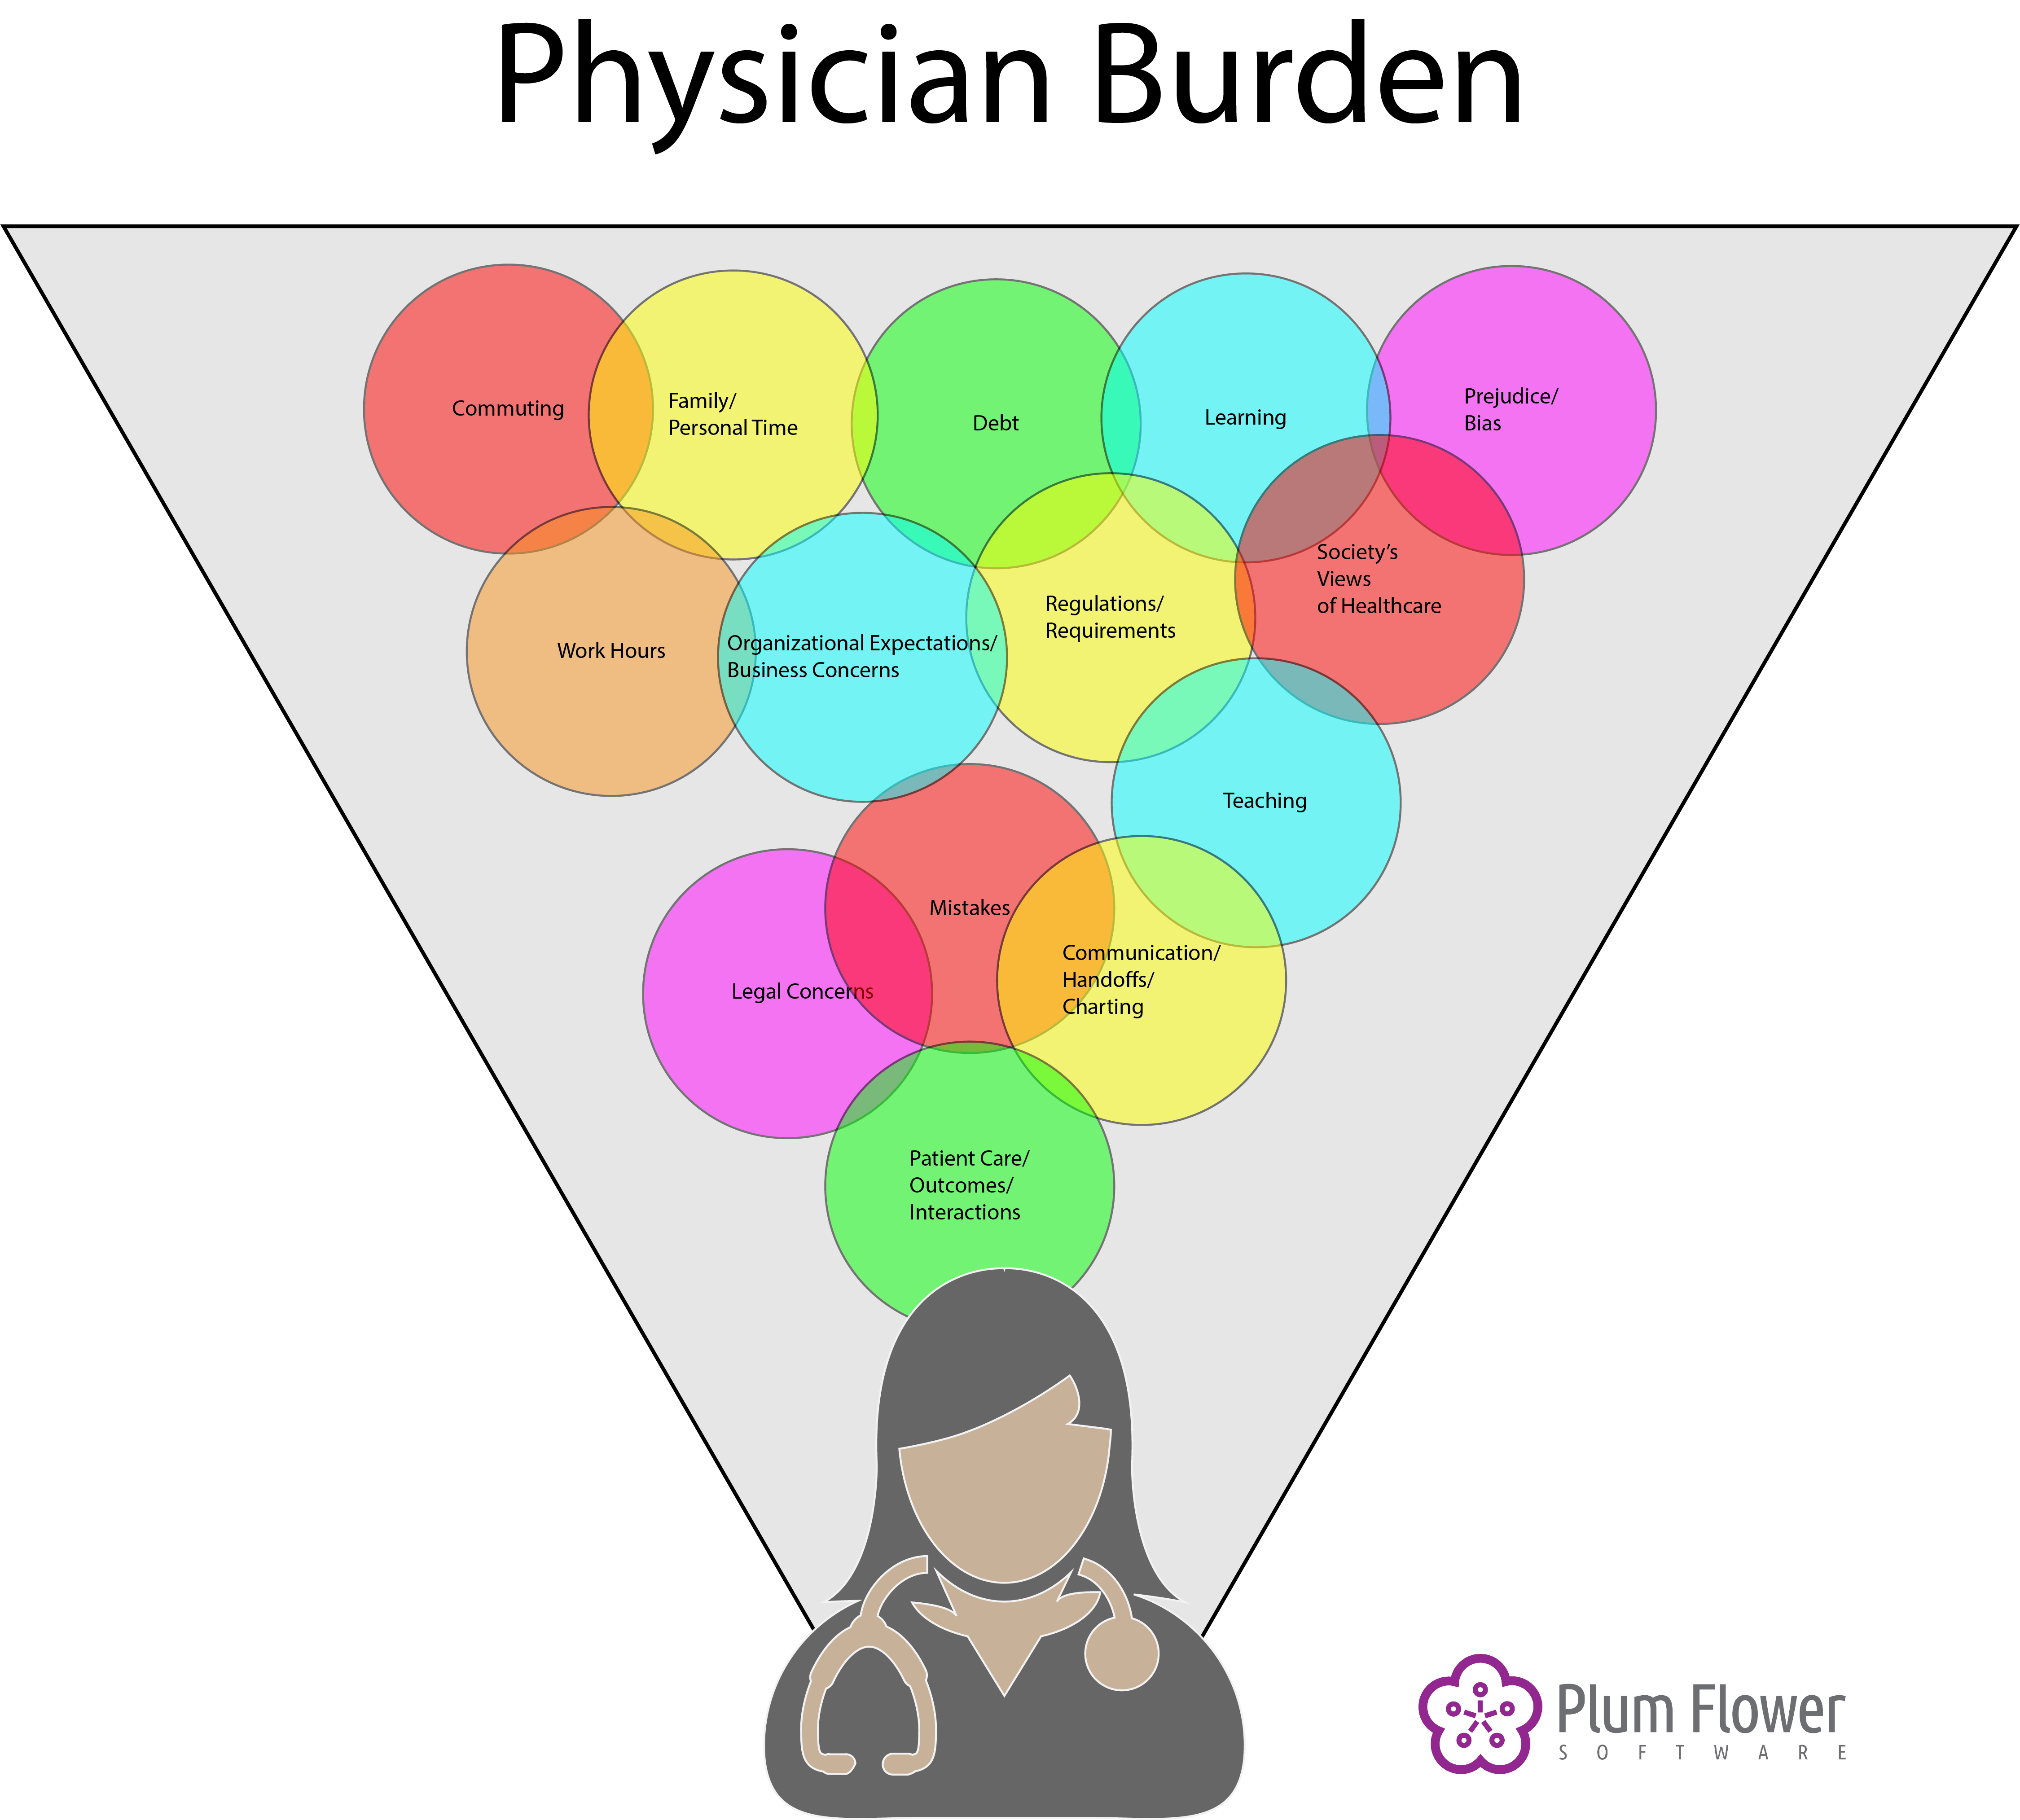 Provider Burden Image